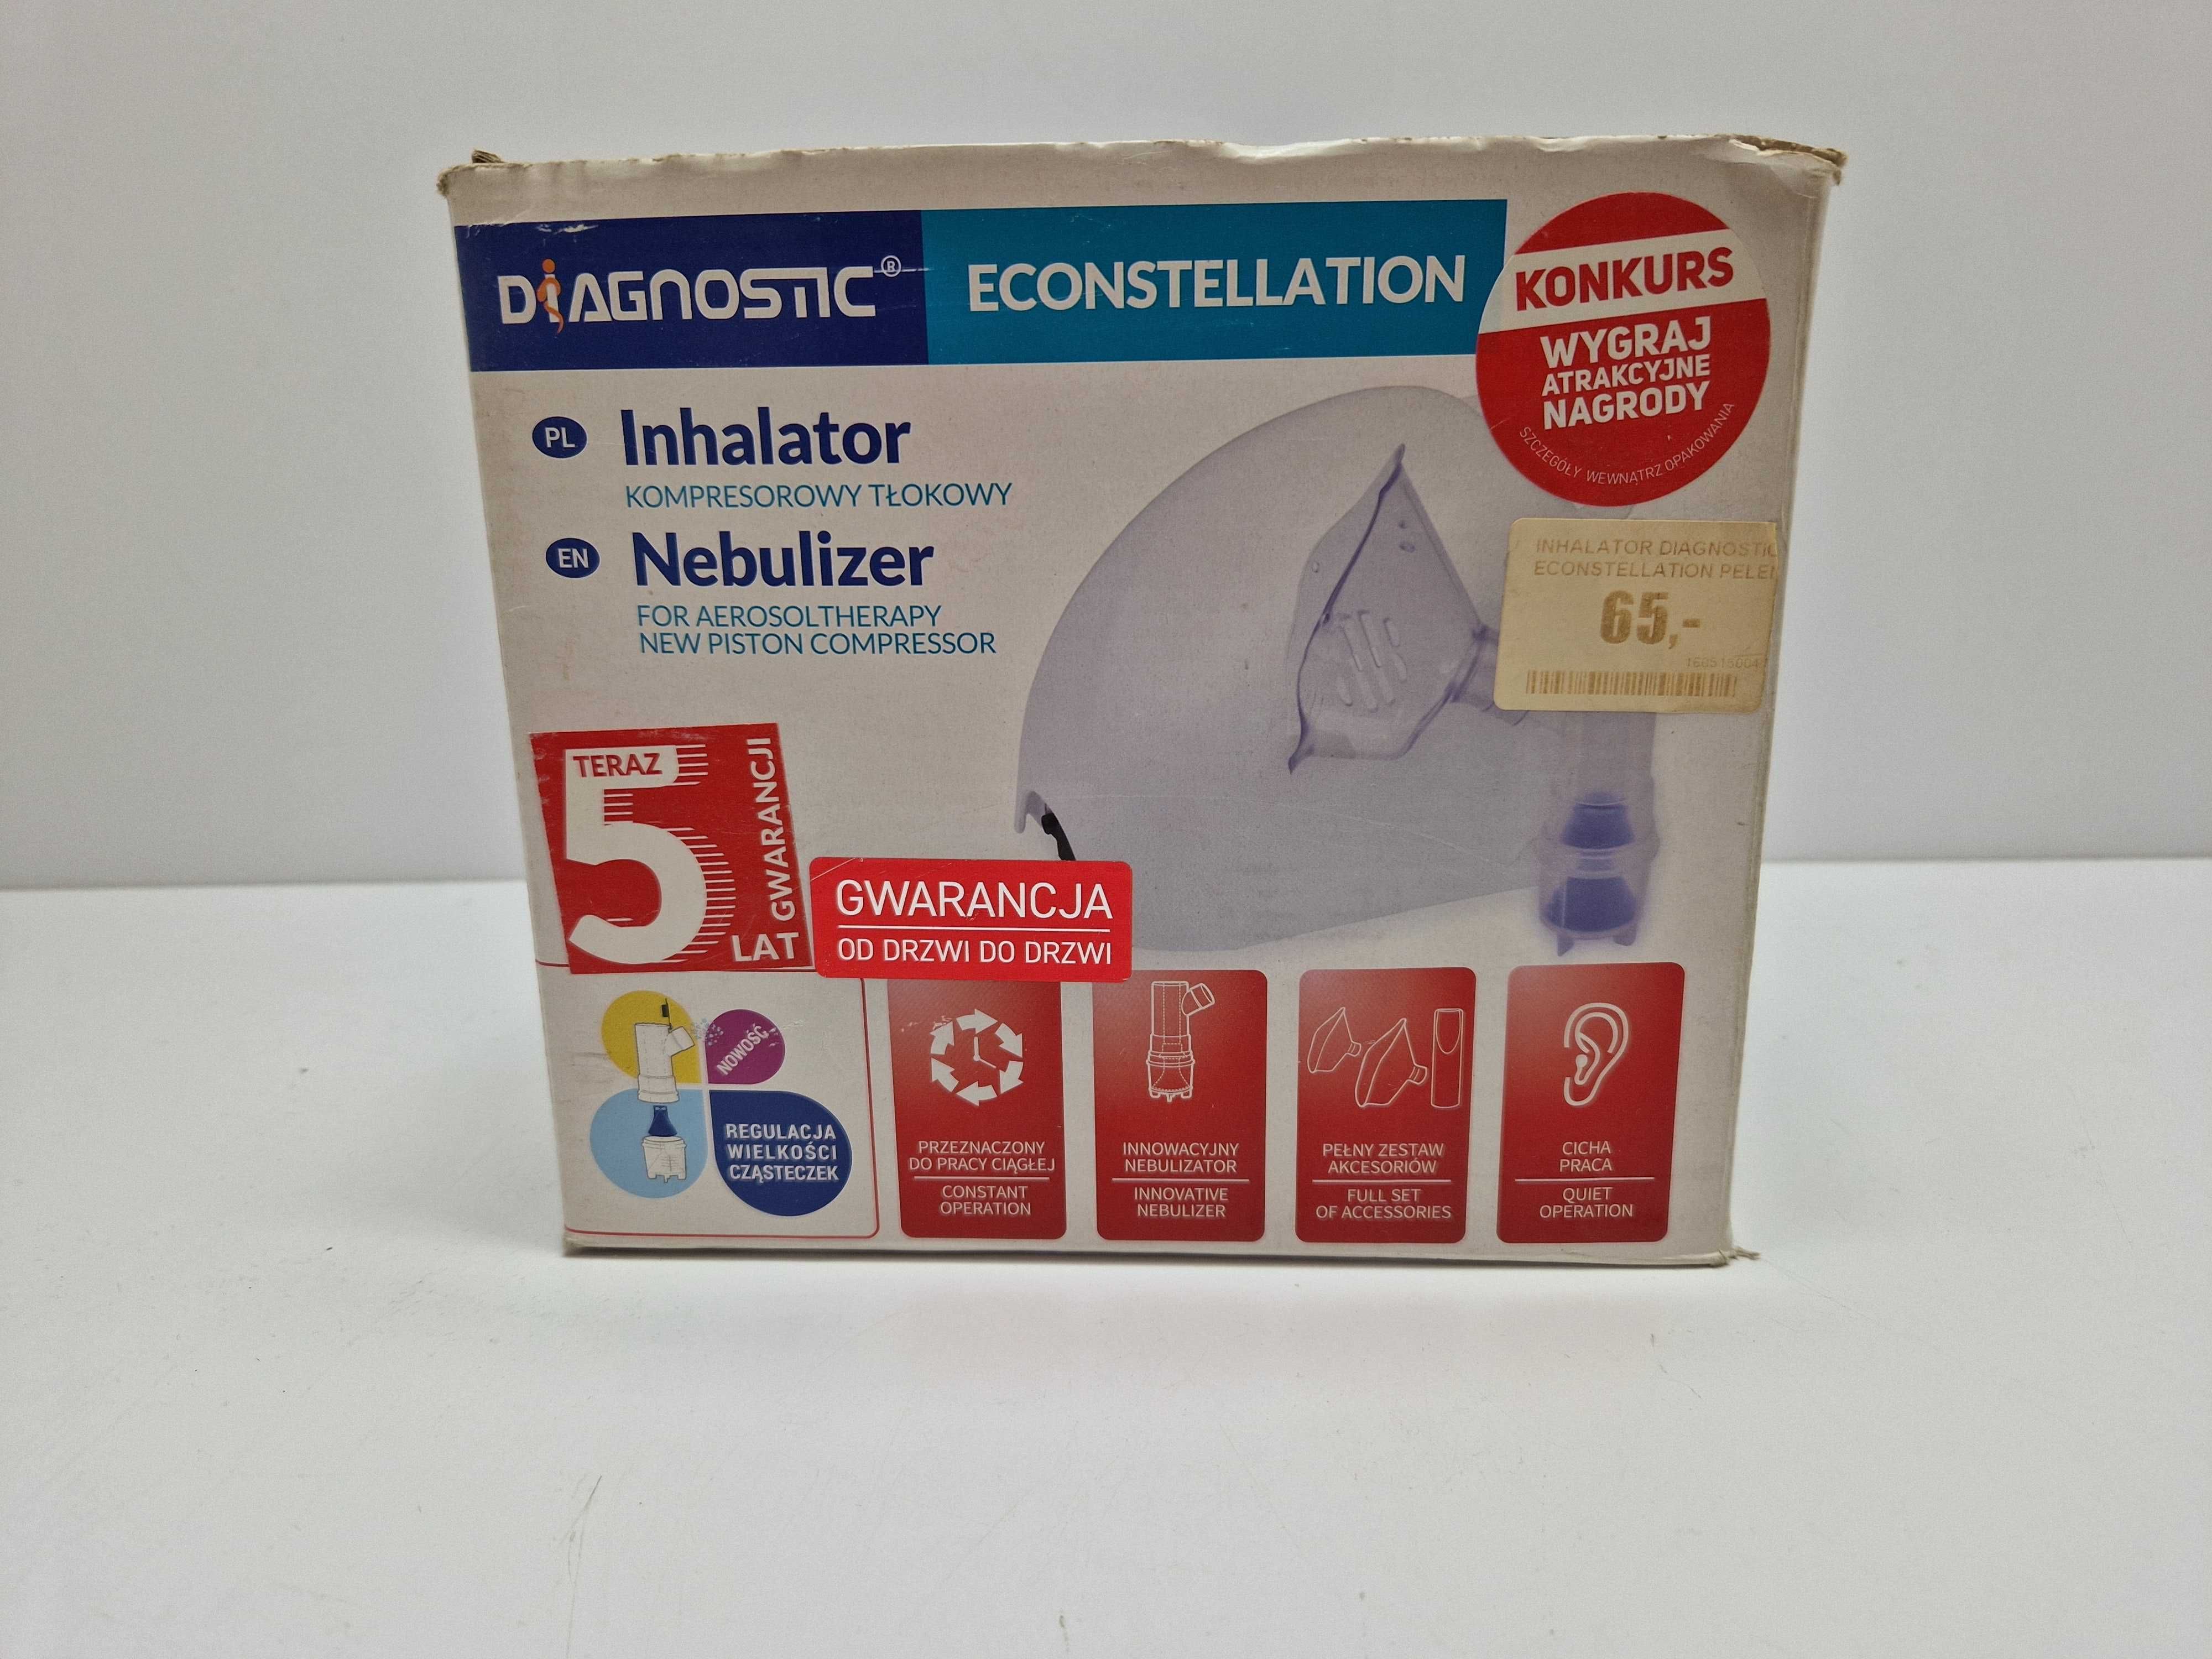 Inhalator Diagnostic Econstellation